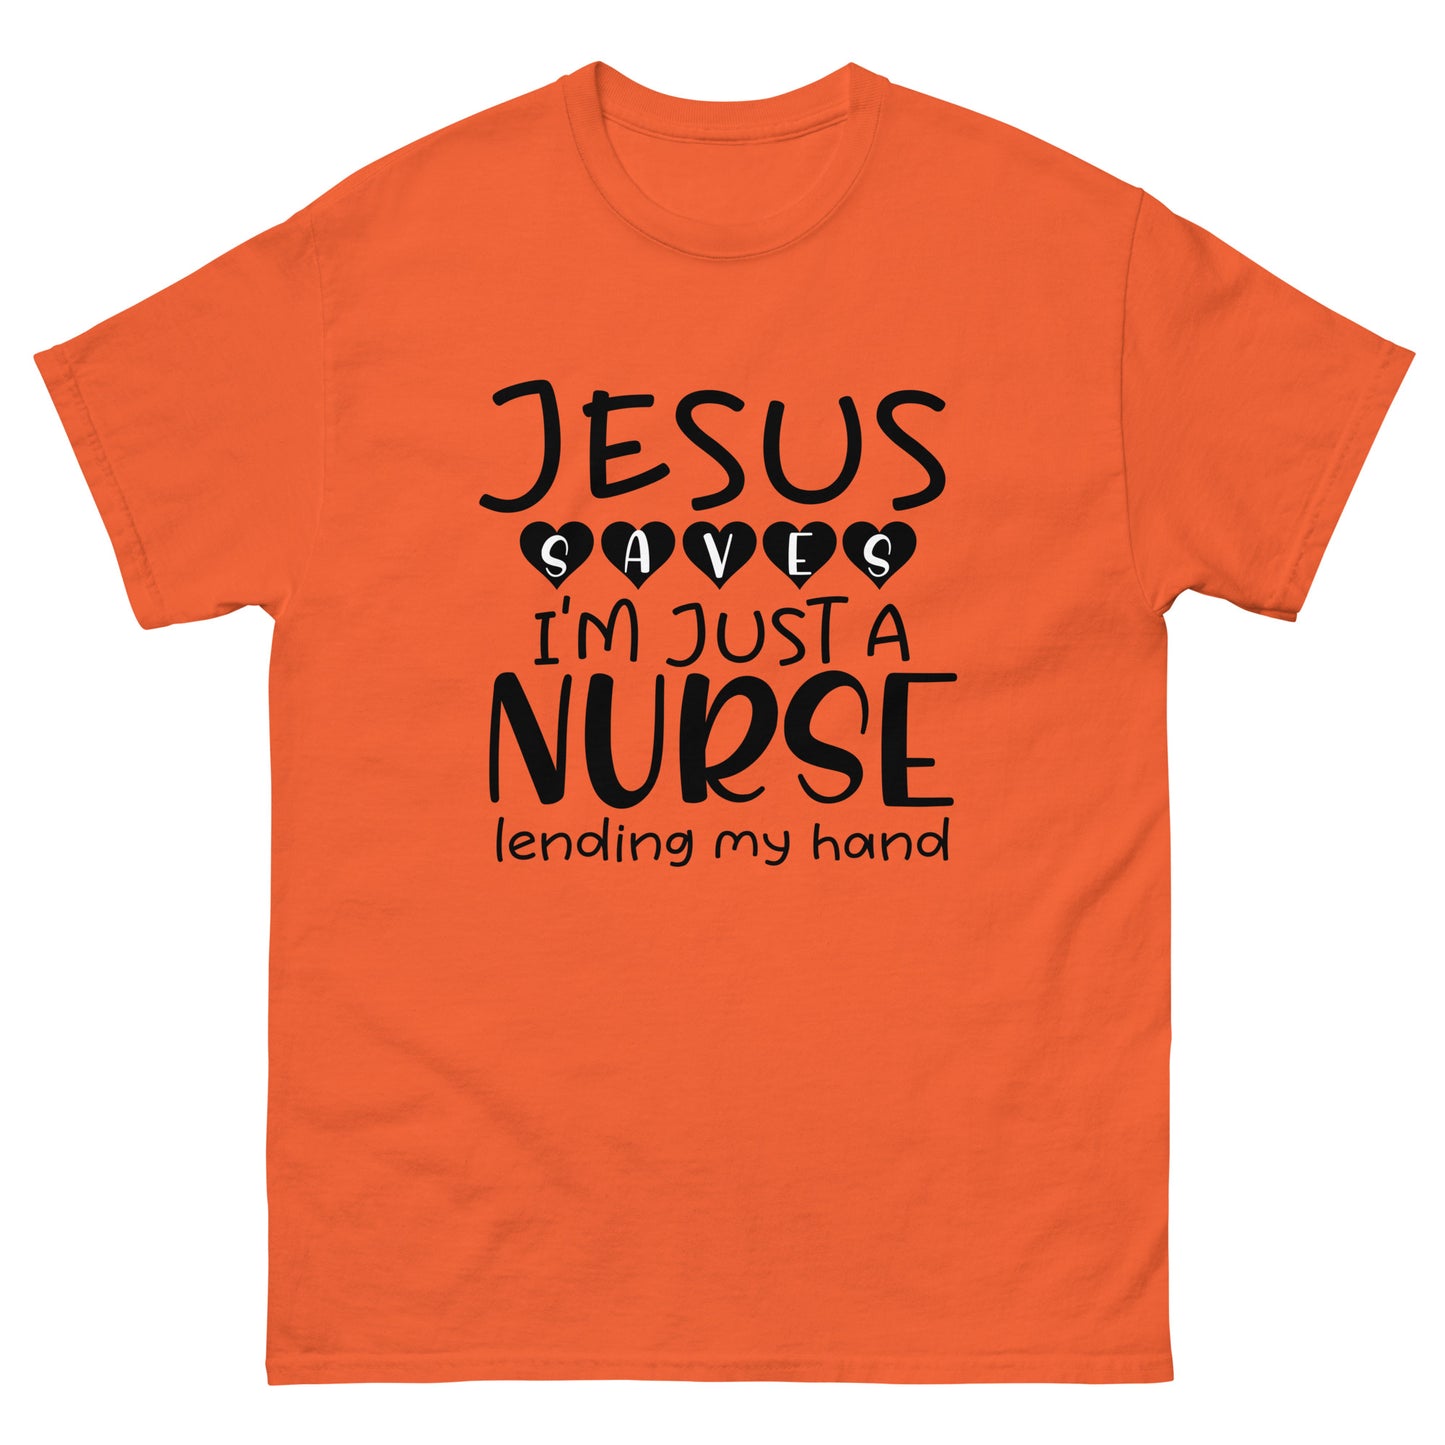 Jesus saves I'm just a nurse - Nursing - classic tee